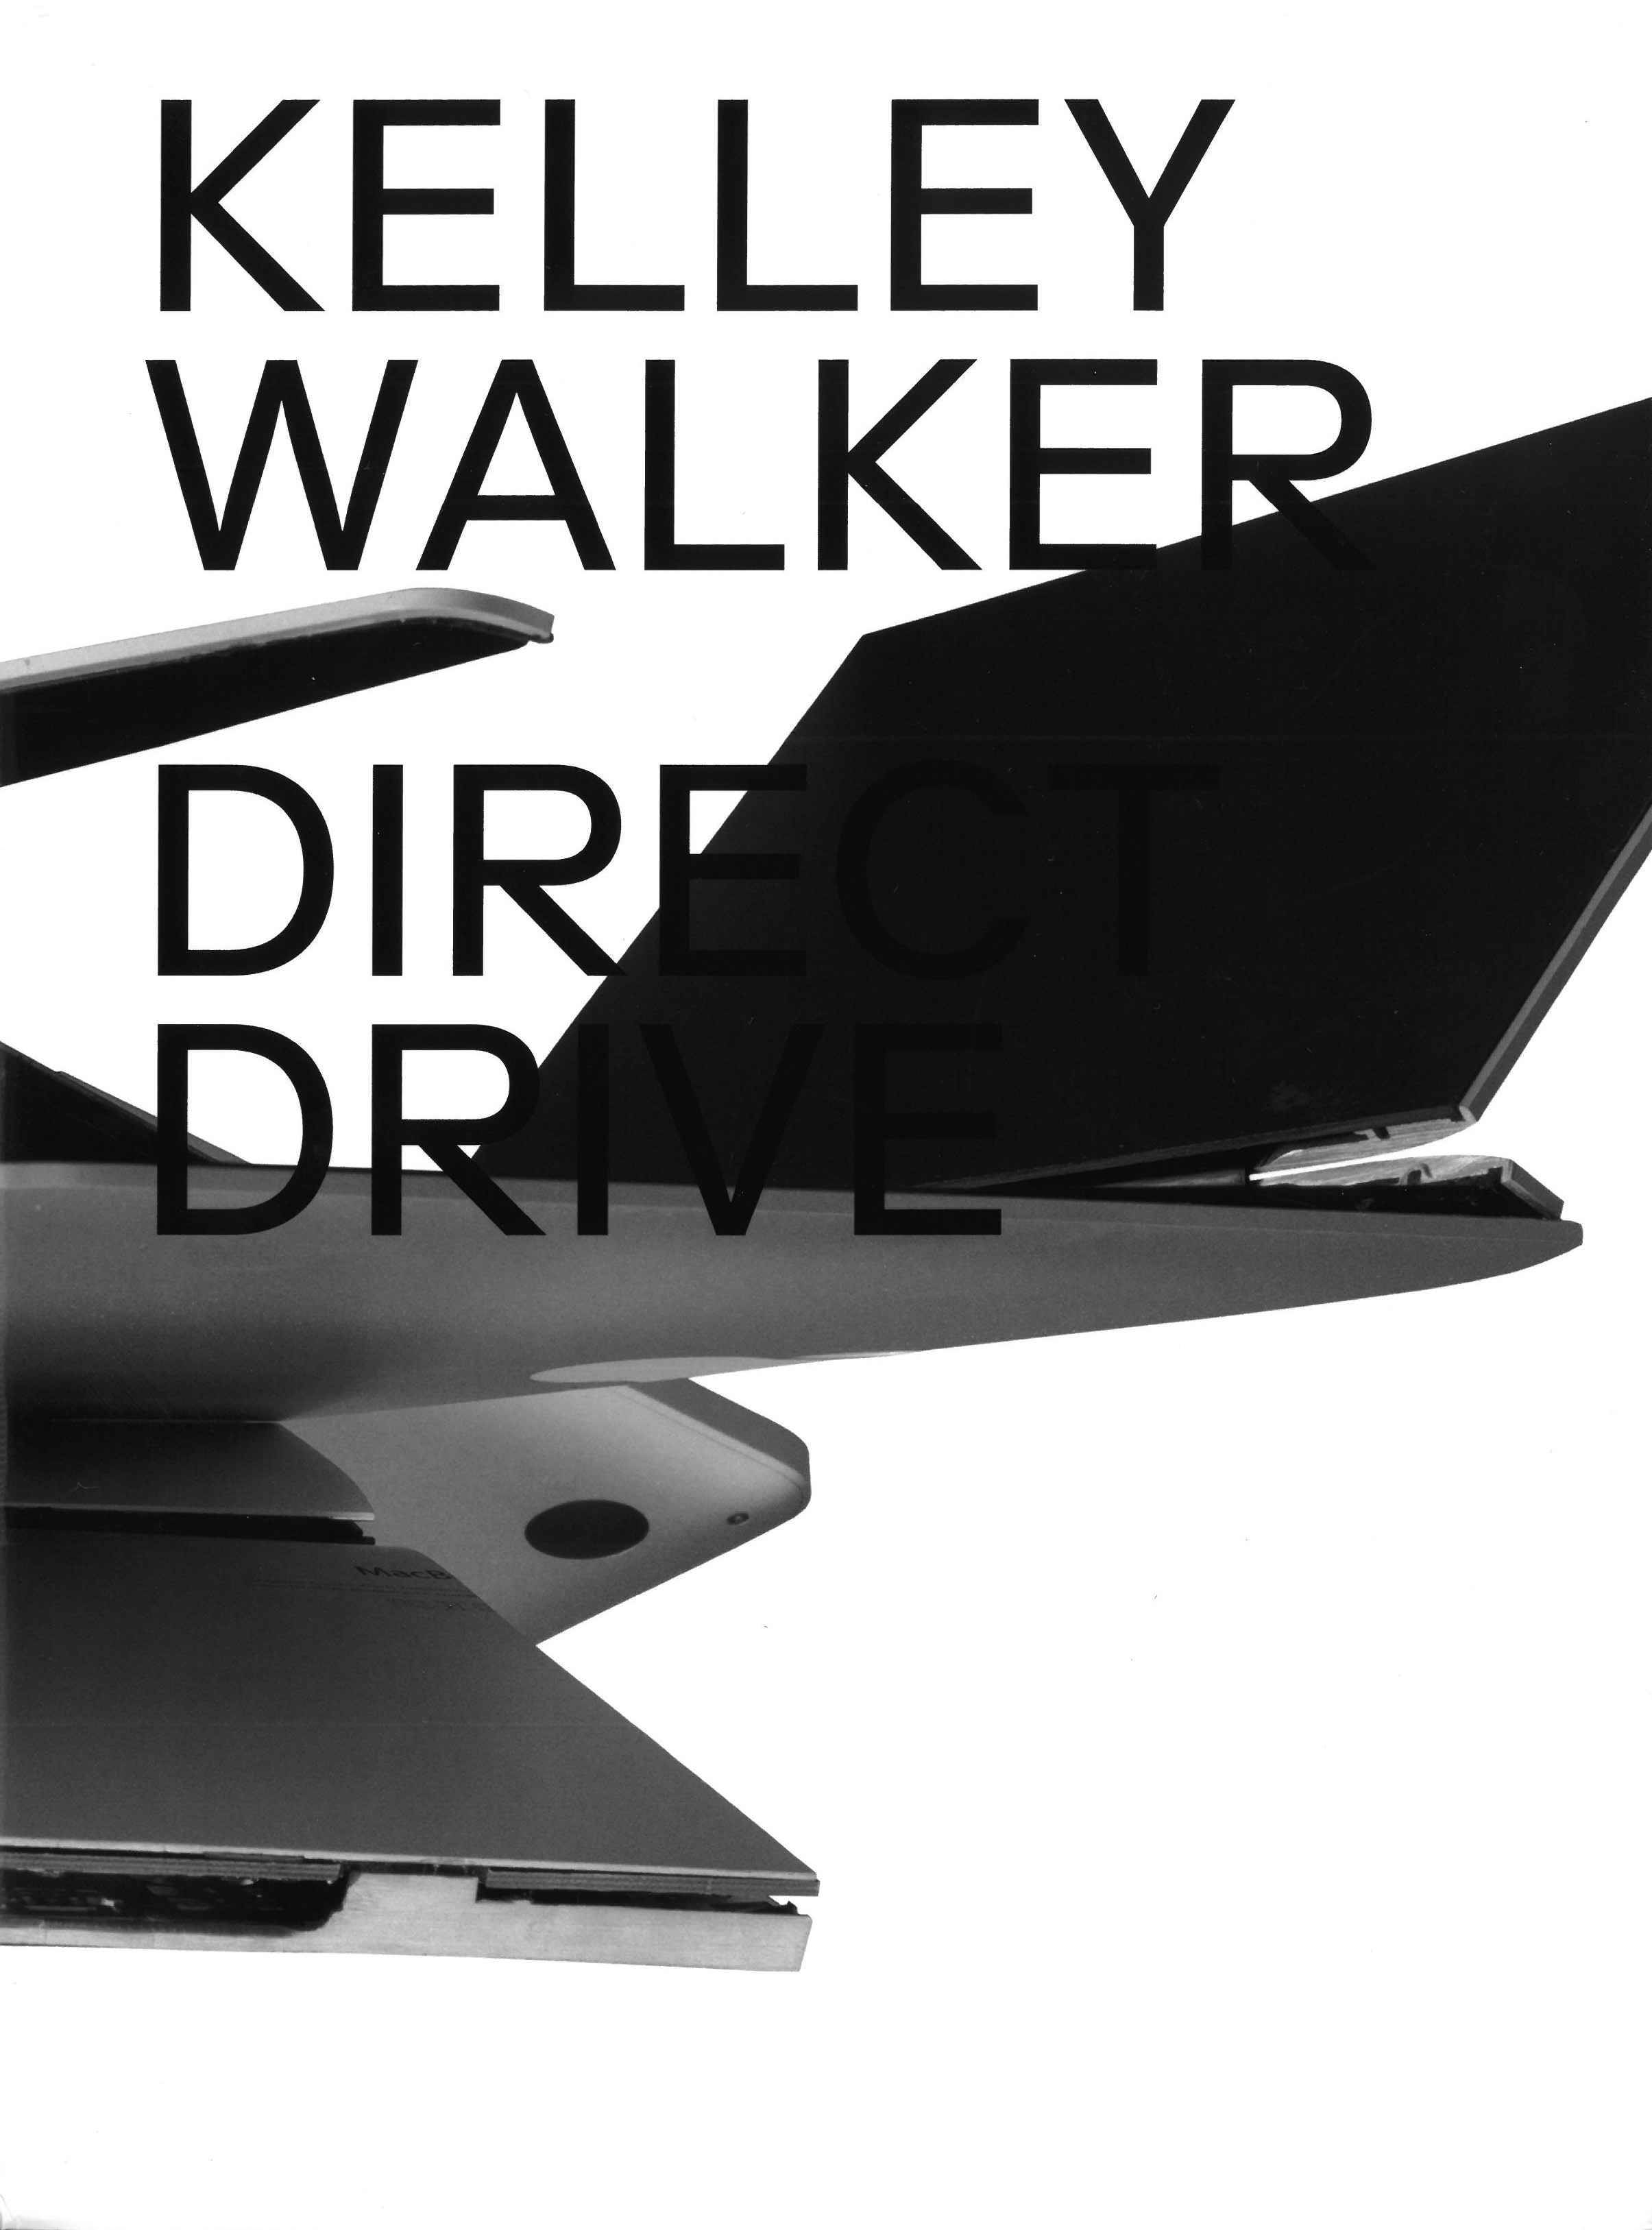 Anne Pontégnie, "Deconstructing VW" in: "Kelley Walker, Direct Drive", edited by Jeffrey Uslip. Zürich: JRP|Ringier, 2016, p.18-20.